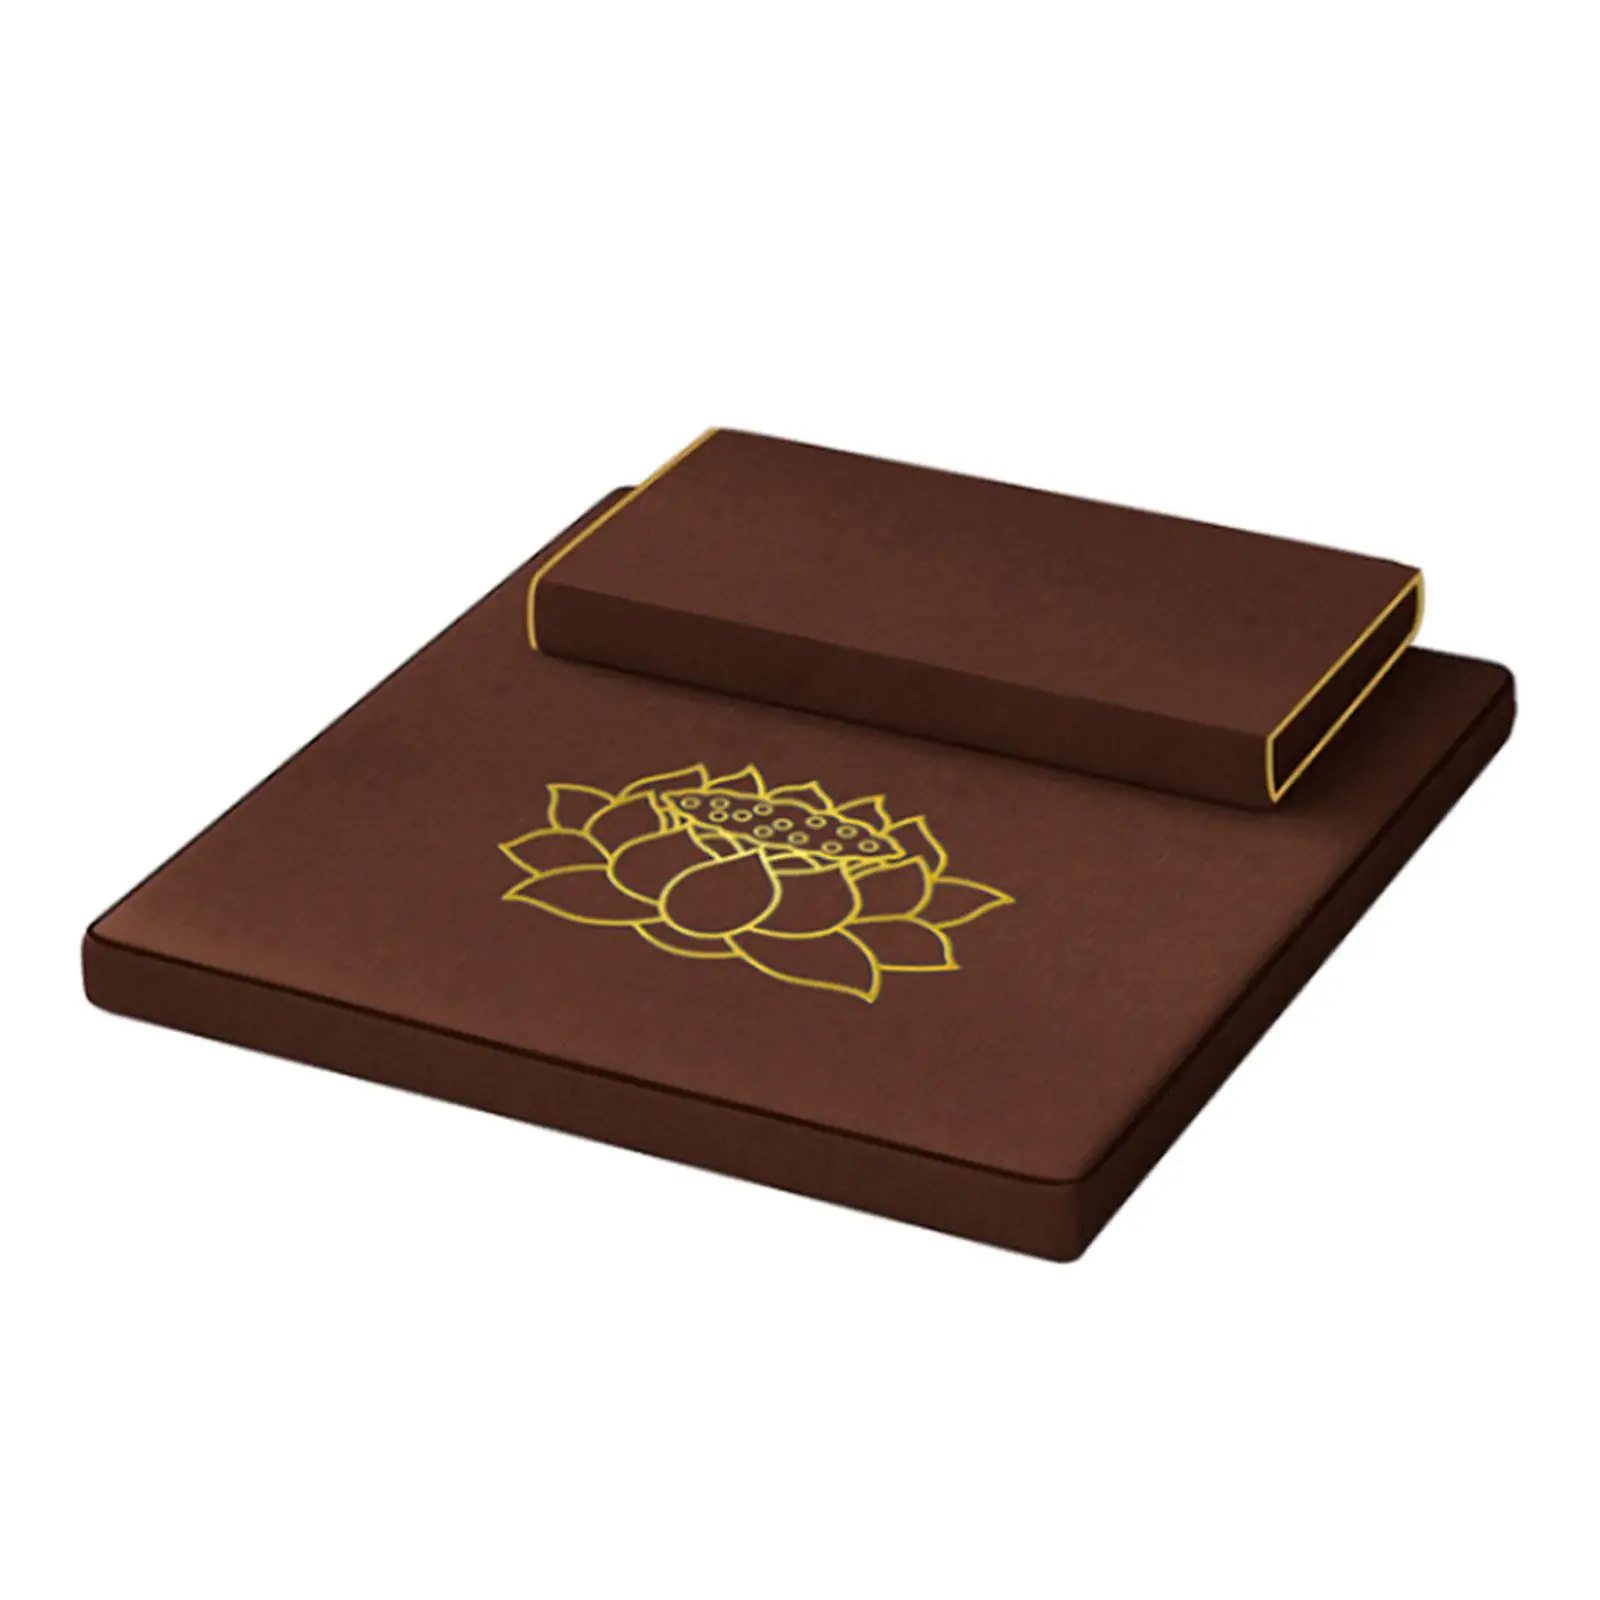 2 Pieces Foldable Floor Pillows Yoga Mats Large Rectangular Pad for Yoga Women Adults Meditation Accessories